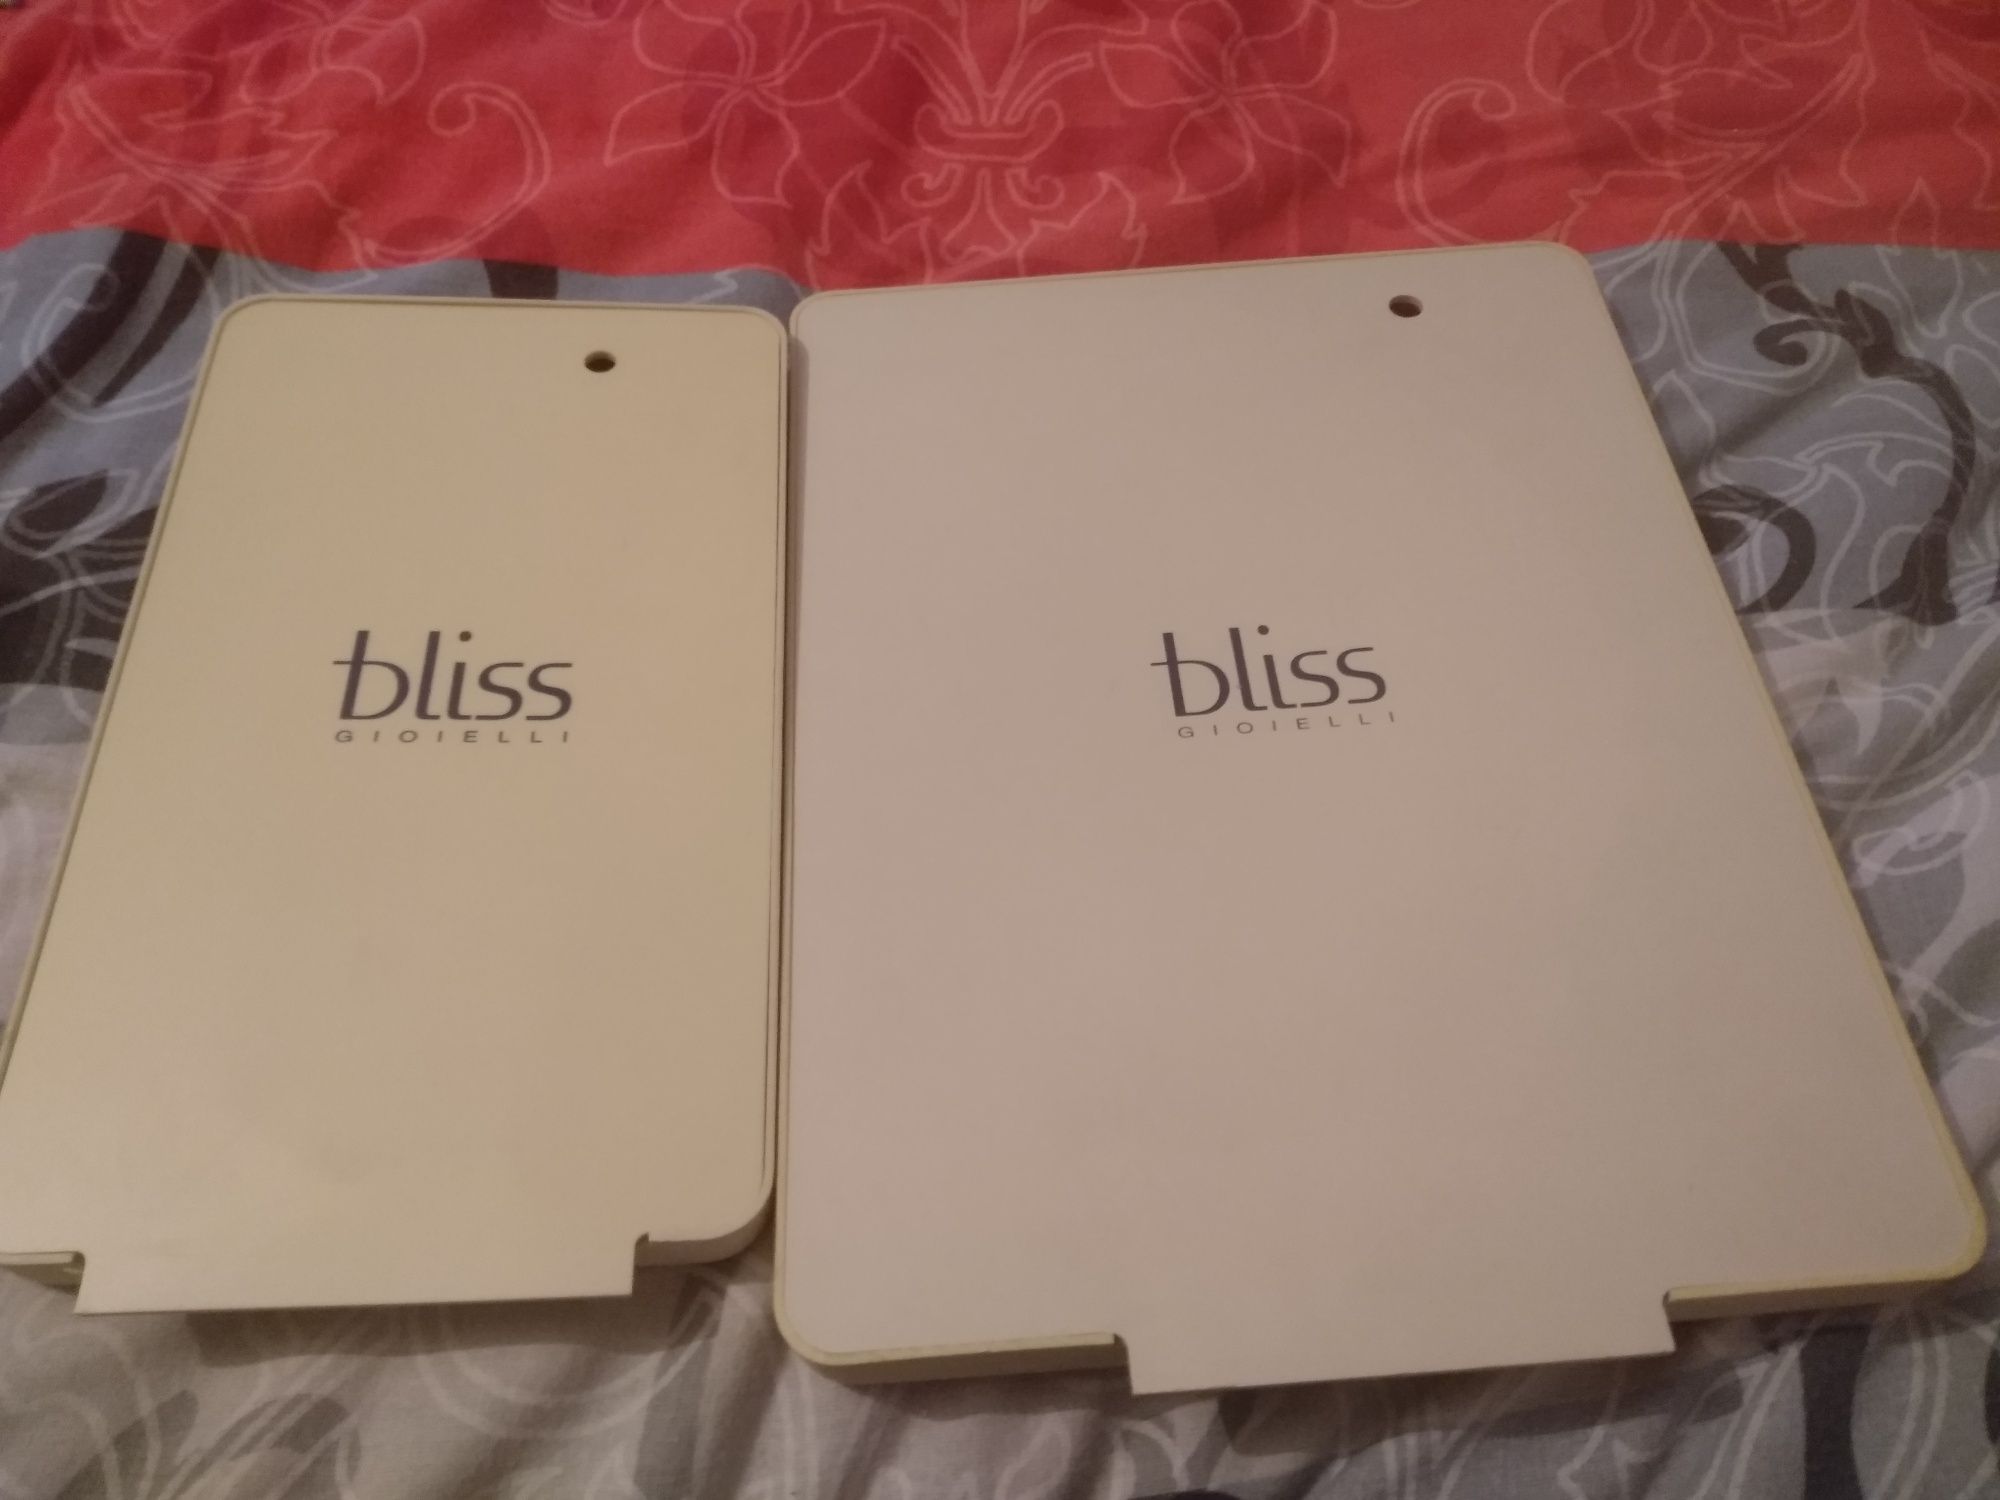 4бр рекламни табели на Бутиковата бижутерска фирма "Bliss"